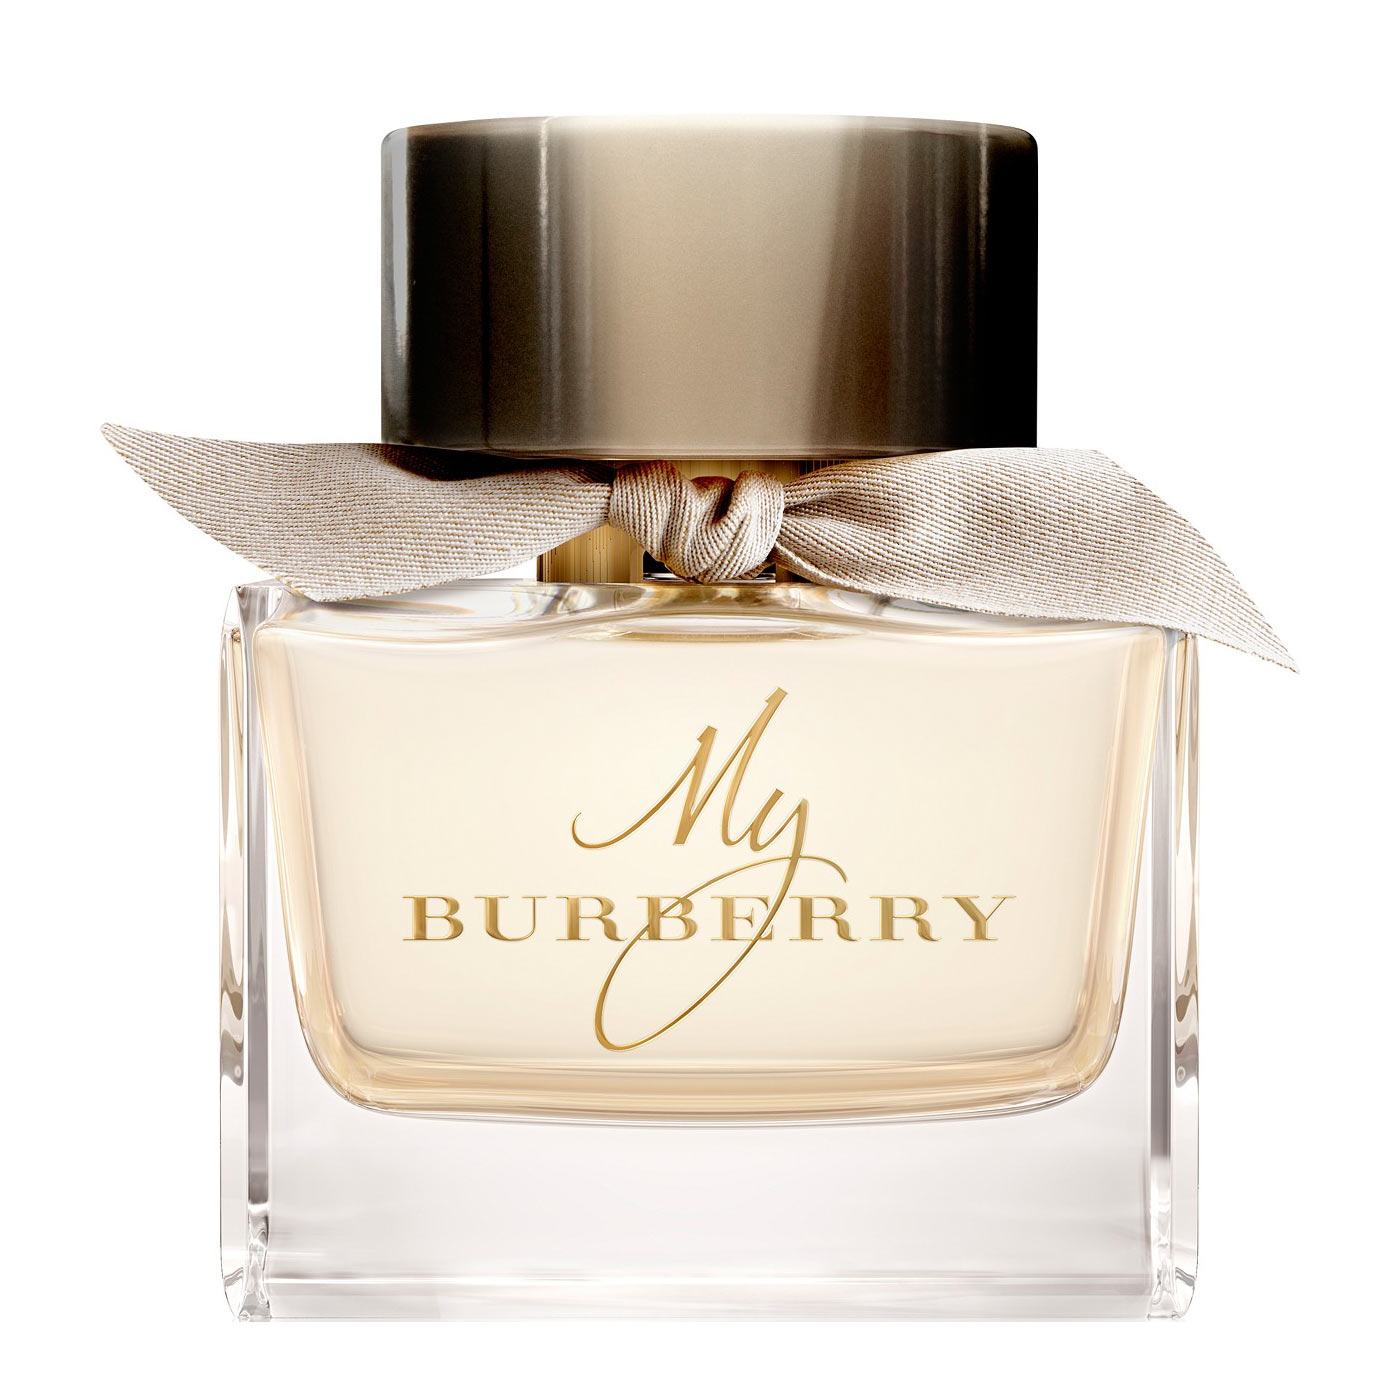 My Burberry Eau de Toilette Perfume by Burberry @ Perfume Emporium ...